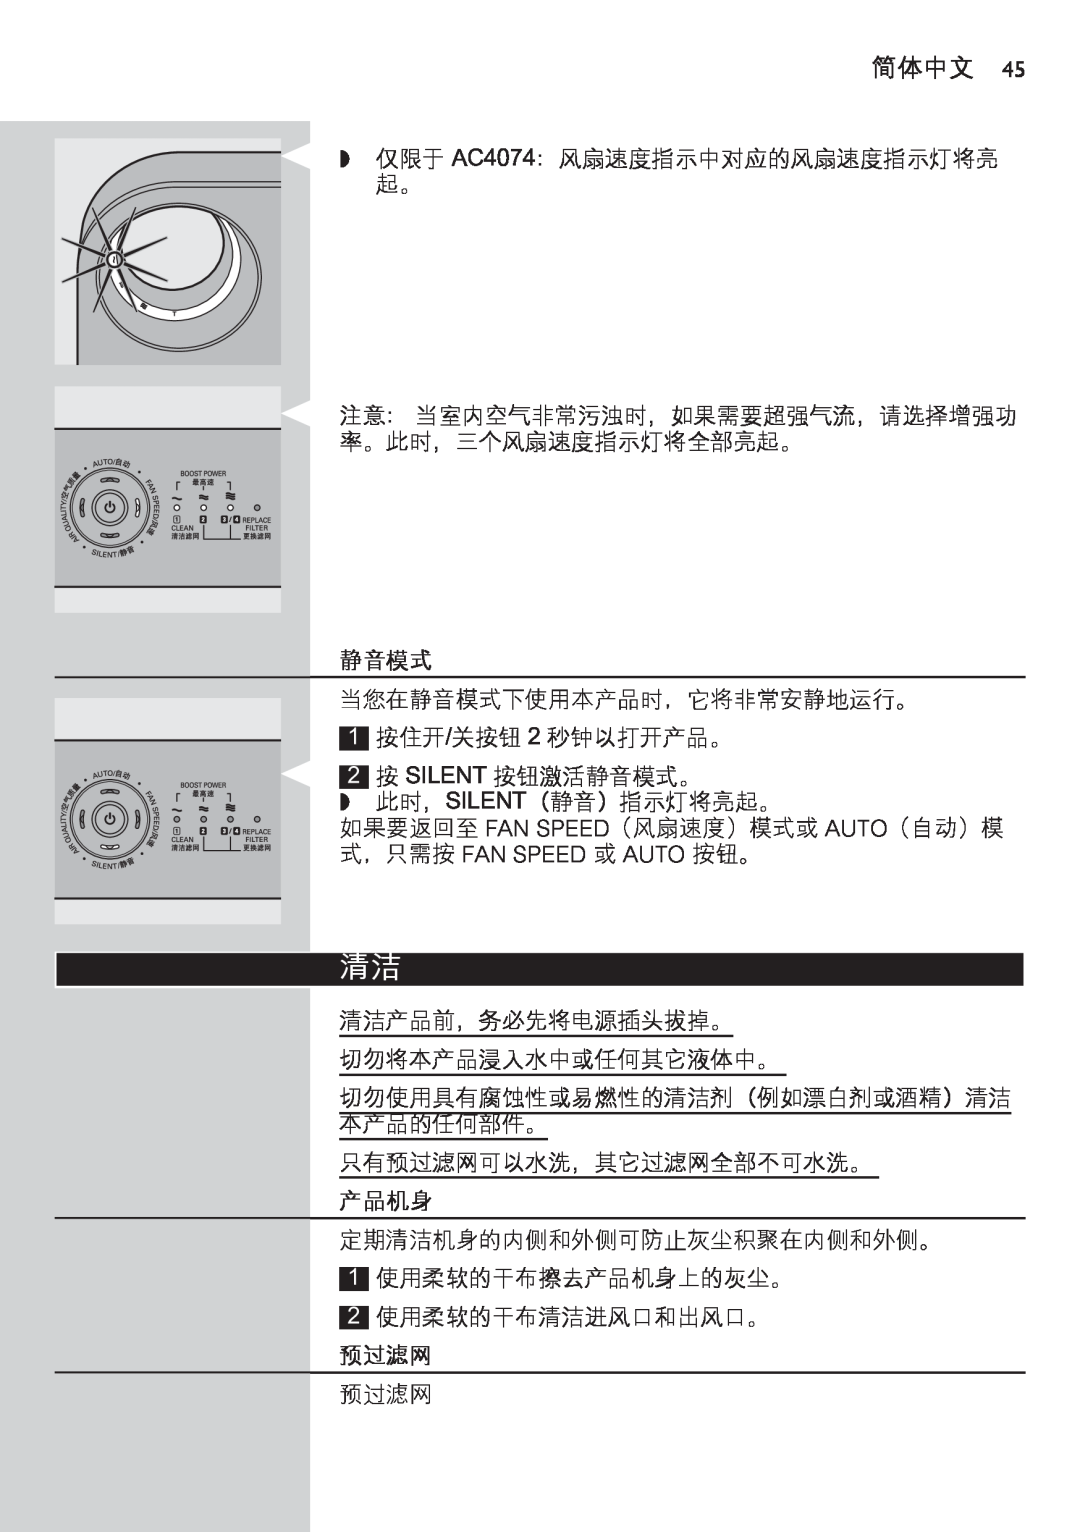 Philips AC4074 manual 静音模式, 产品机身, 预过滤网, 简体中文 